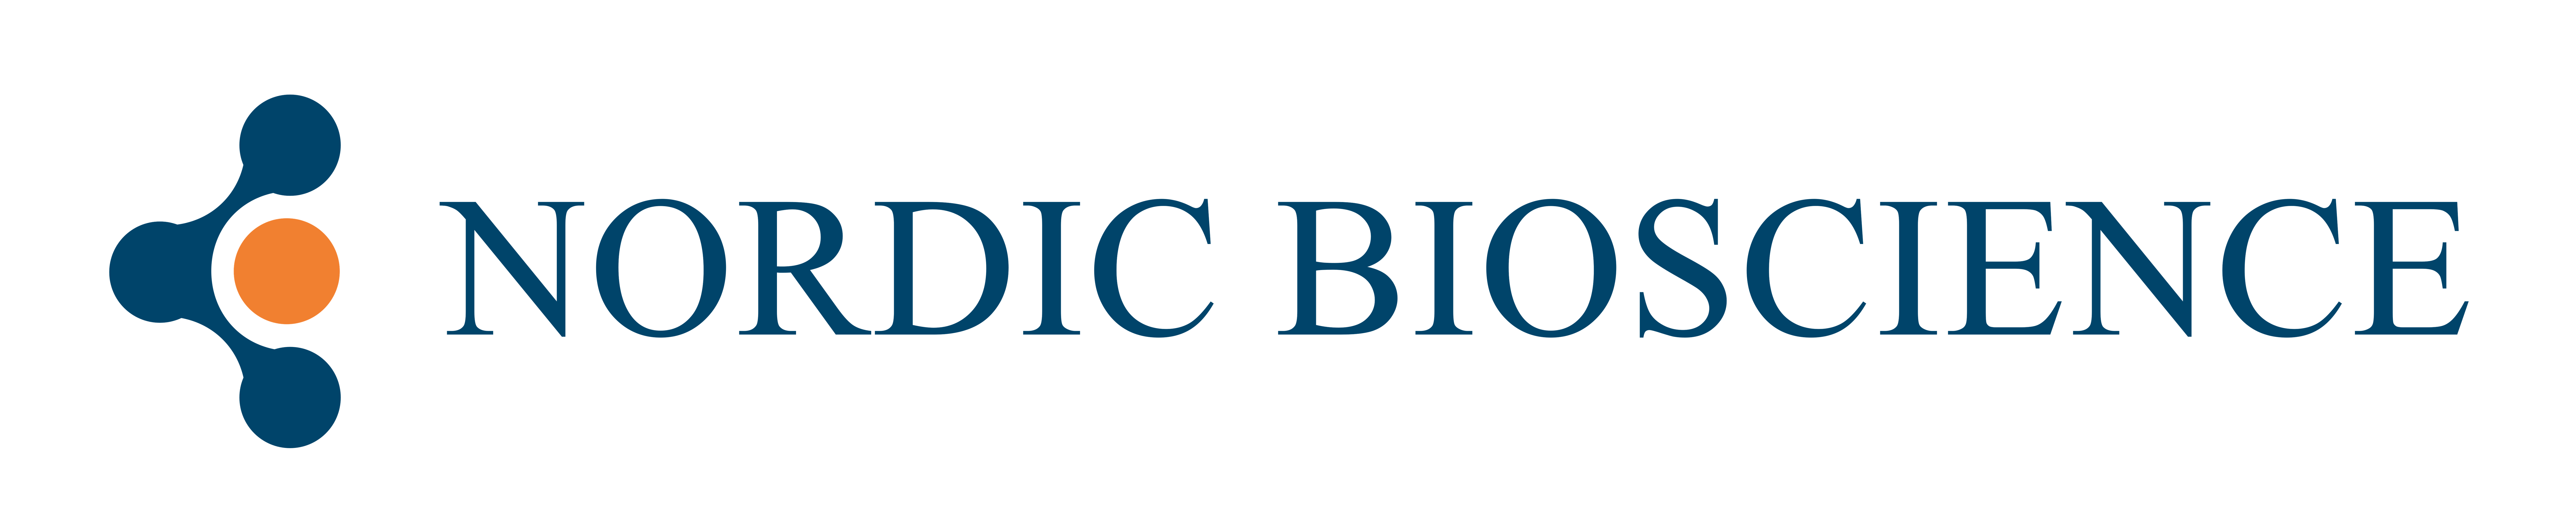 Logo_Nordic_Bioscience_HighRes6